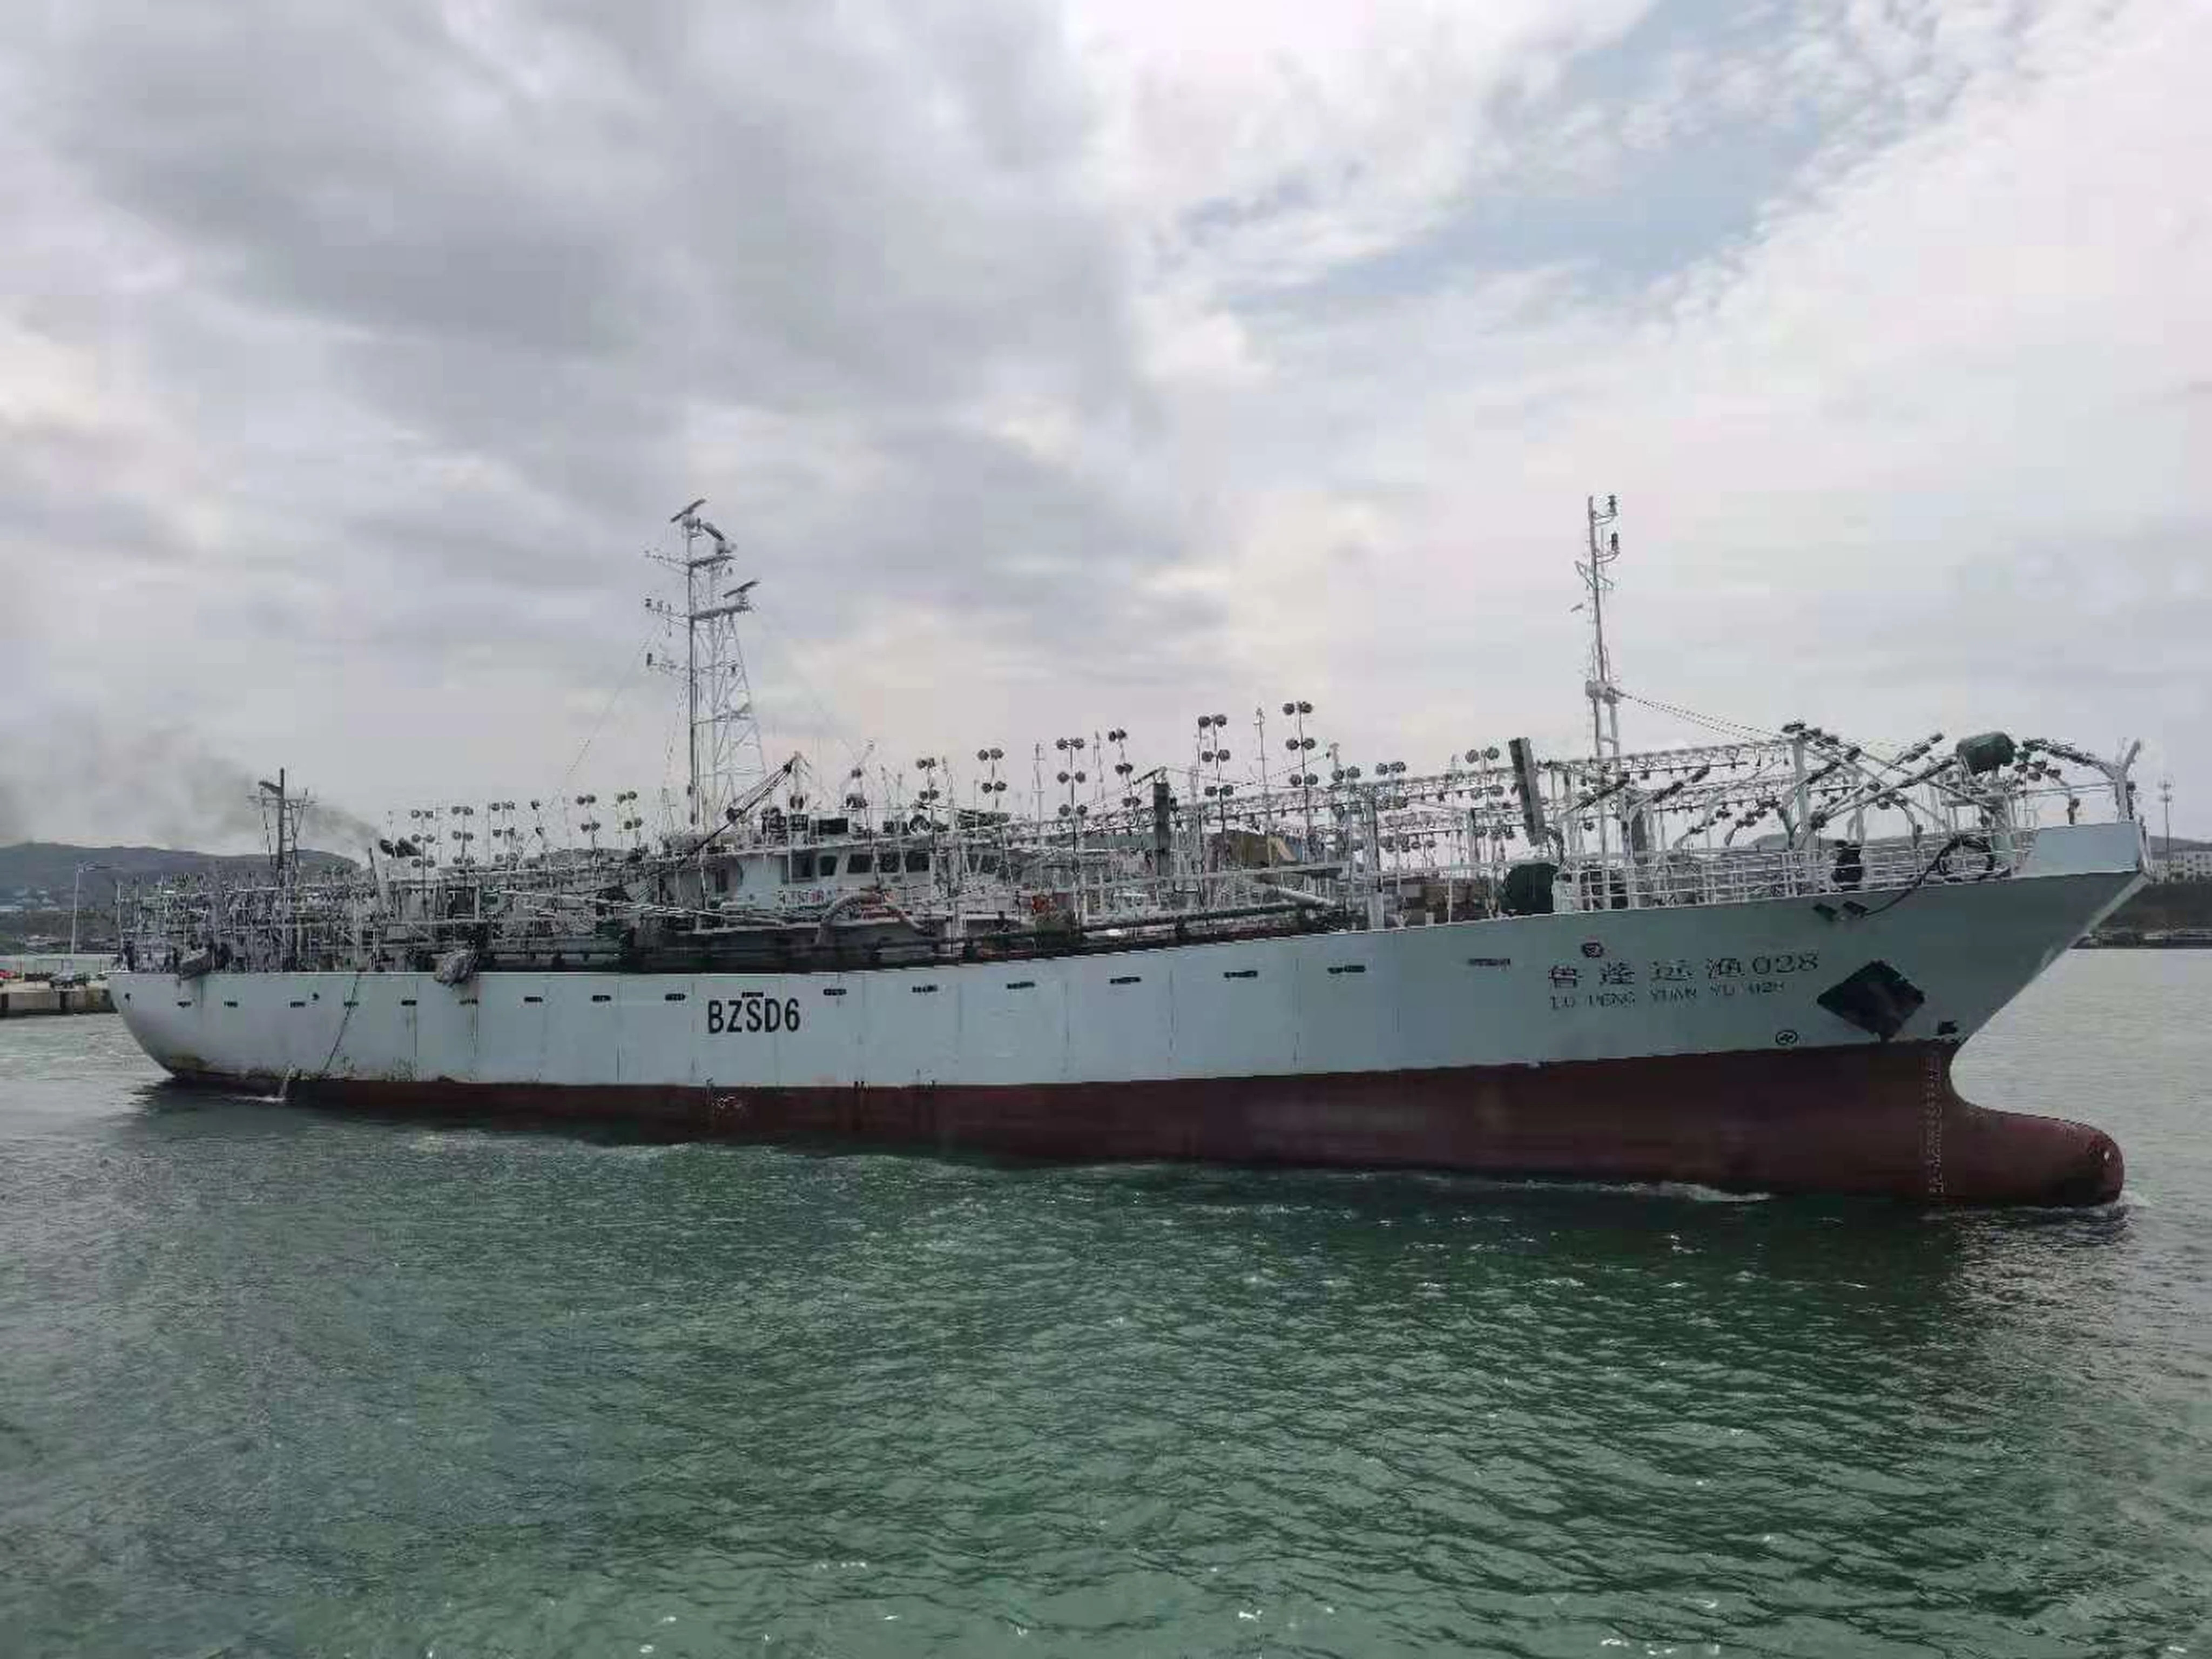 Chinese fishing boat capsizes in Indian Ocean, 39 crew members missing